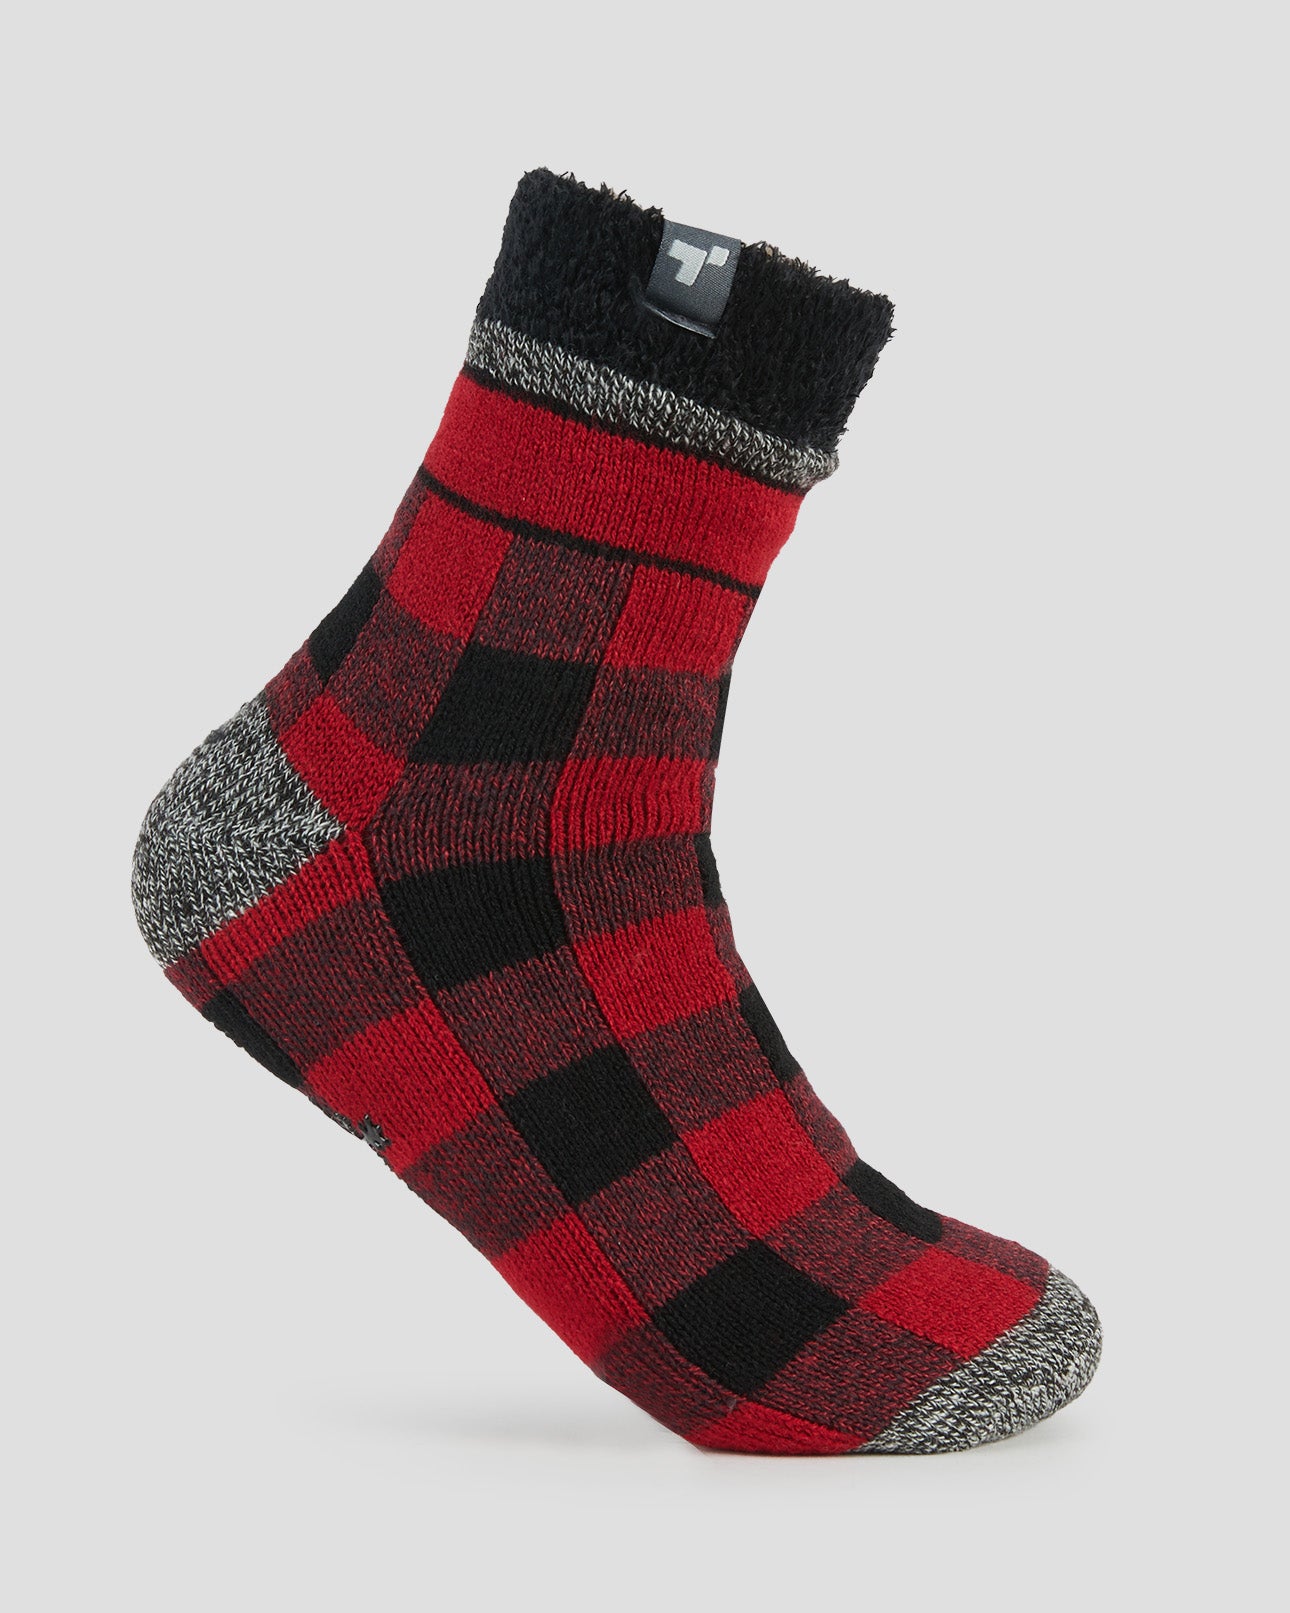 Adults' Dual Layer Anti-Slip Cabin Socks | Color: Red Buffalo